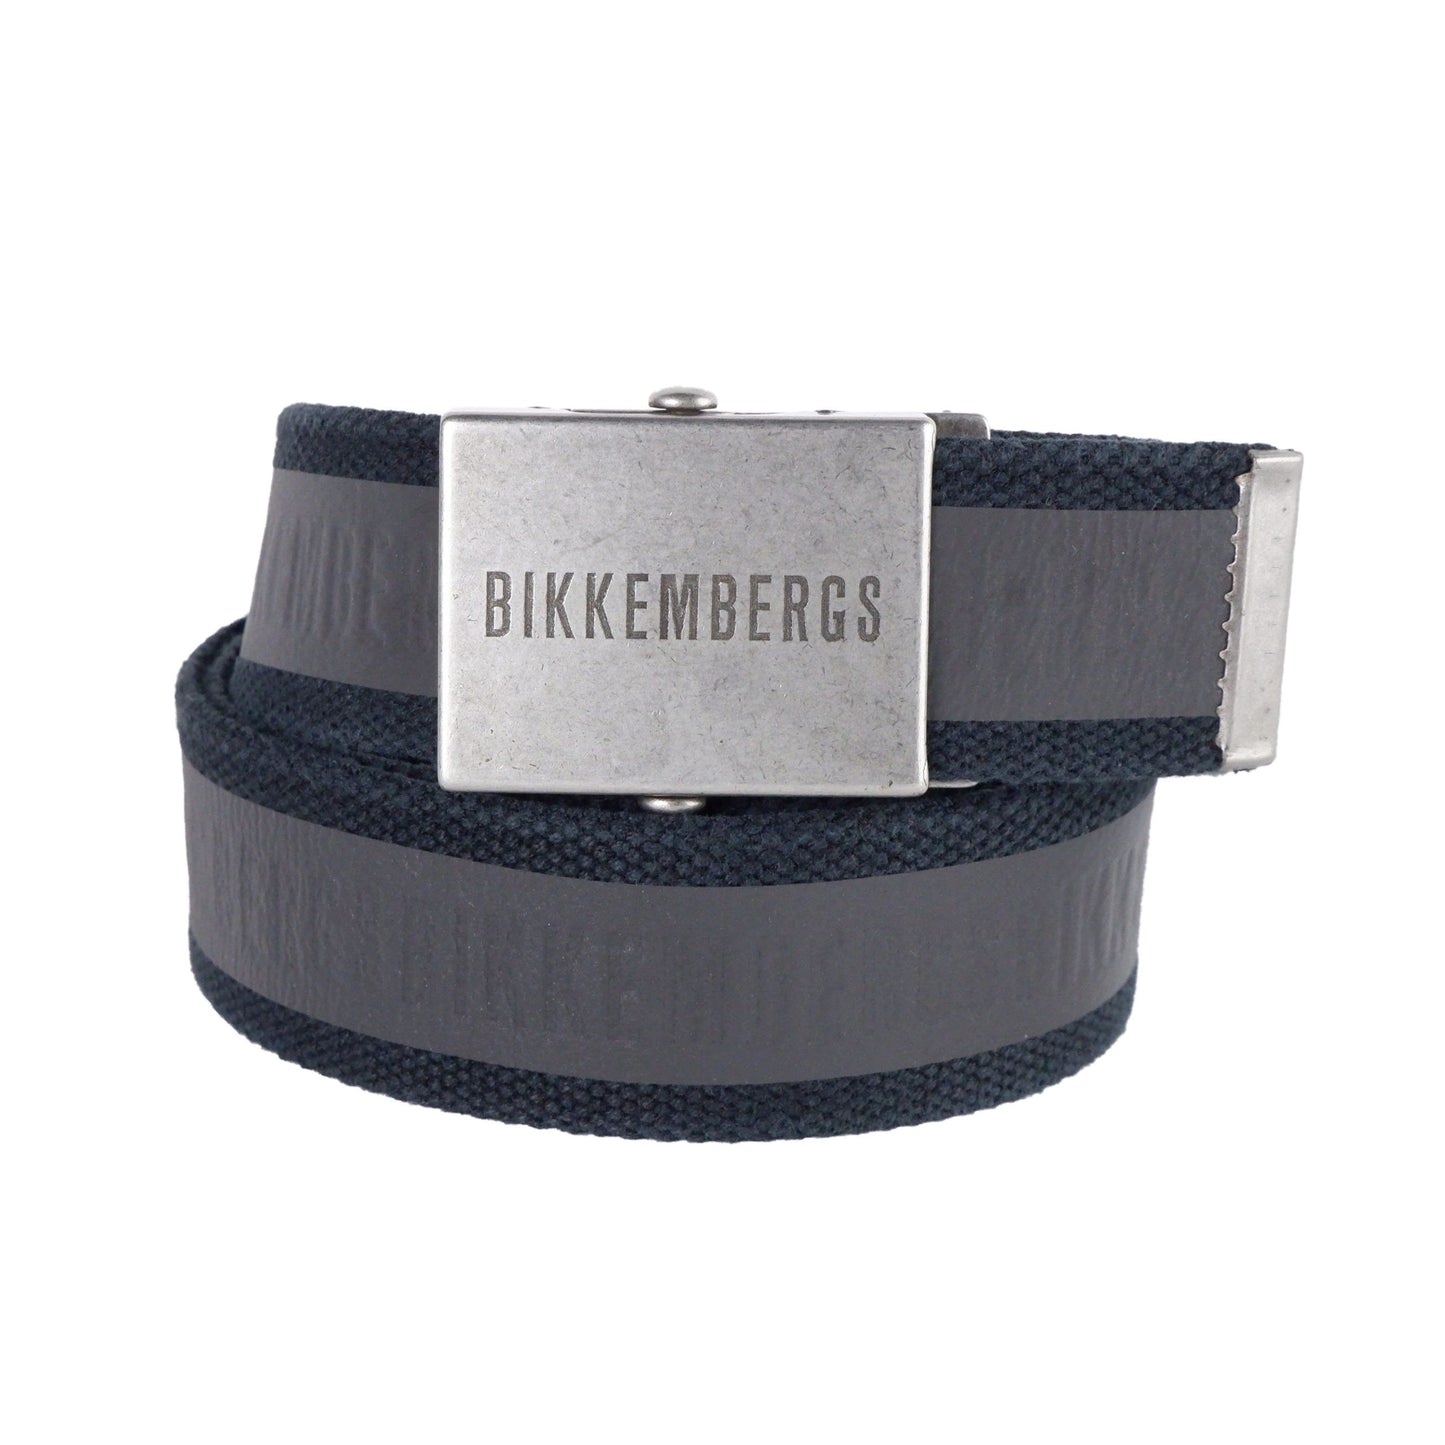 Bikkembergs Black Cotton Belt